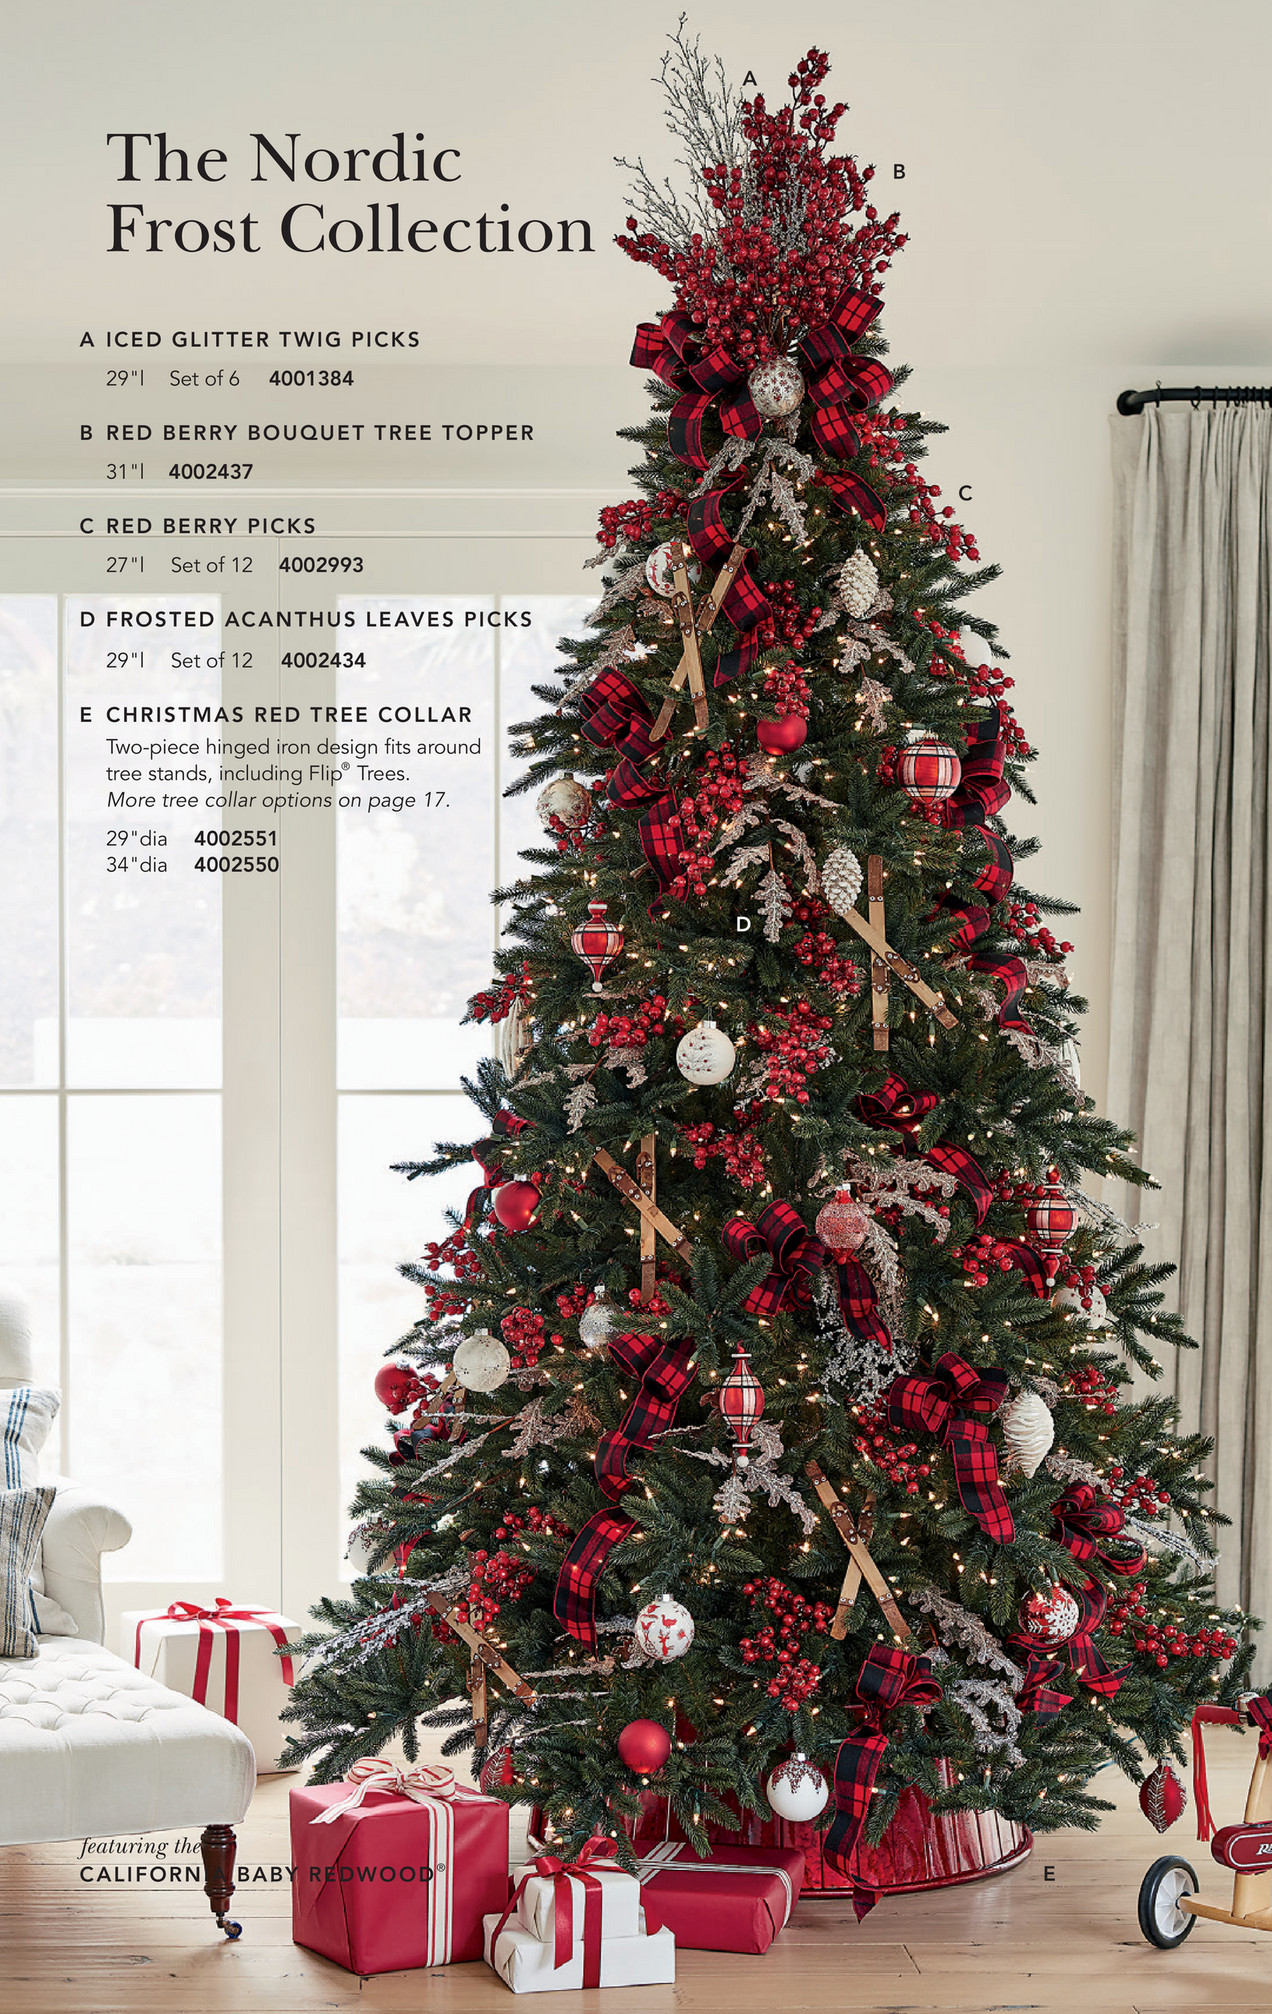 Balsam Hill - 2019 Holiday 1 - Farmhouse Christmas Mixed Materials Ornaments